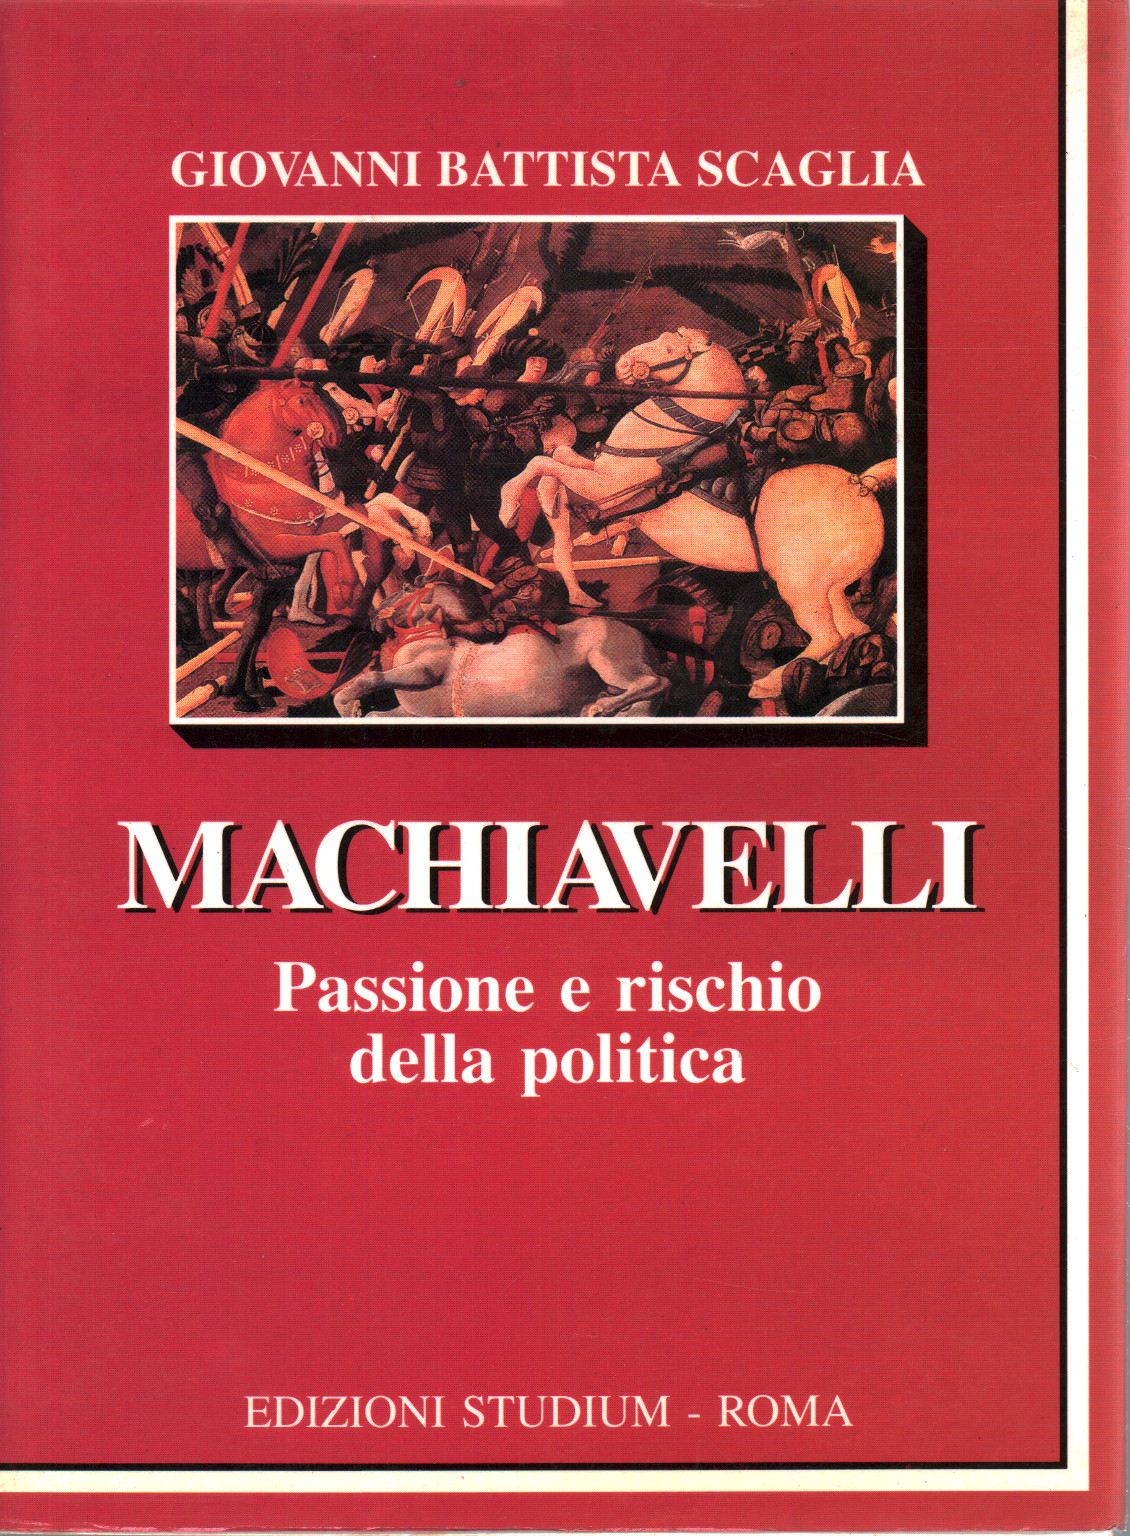 Maquiavelo